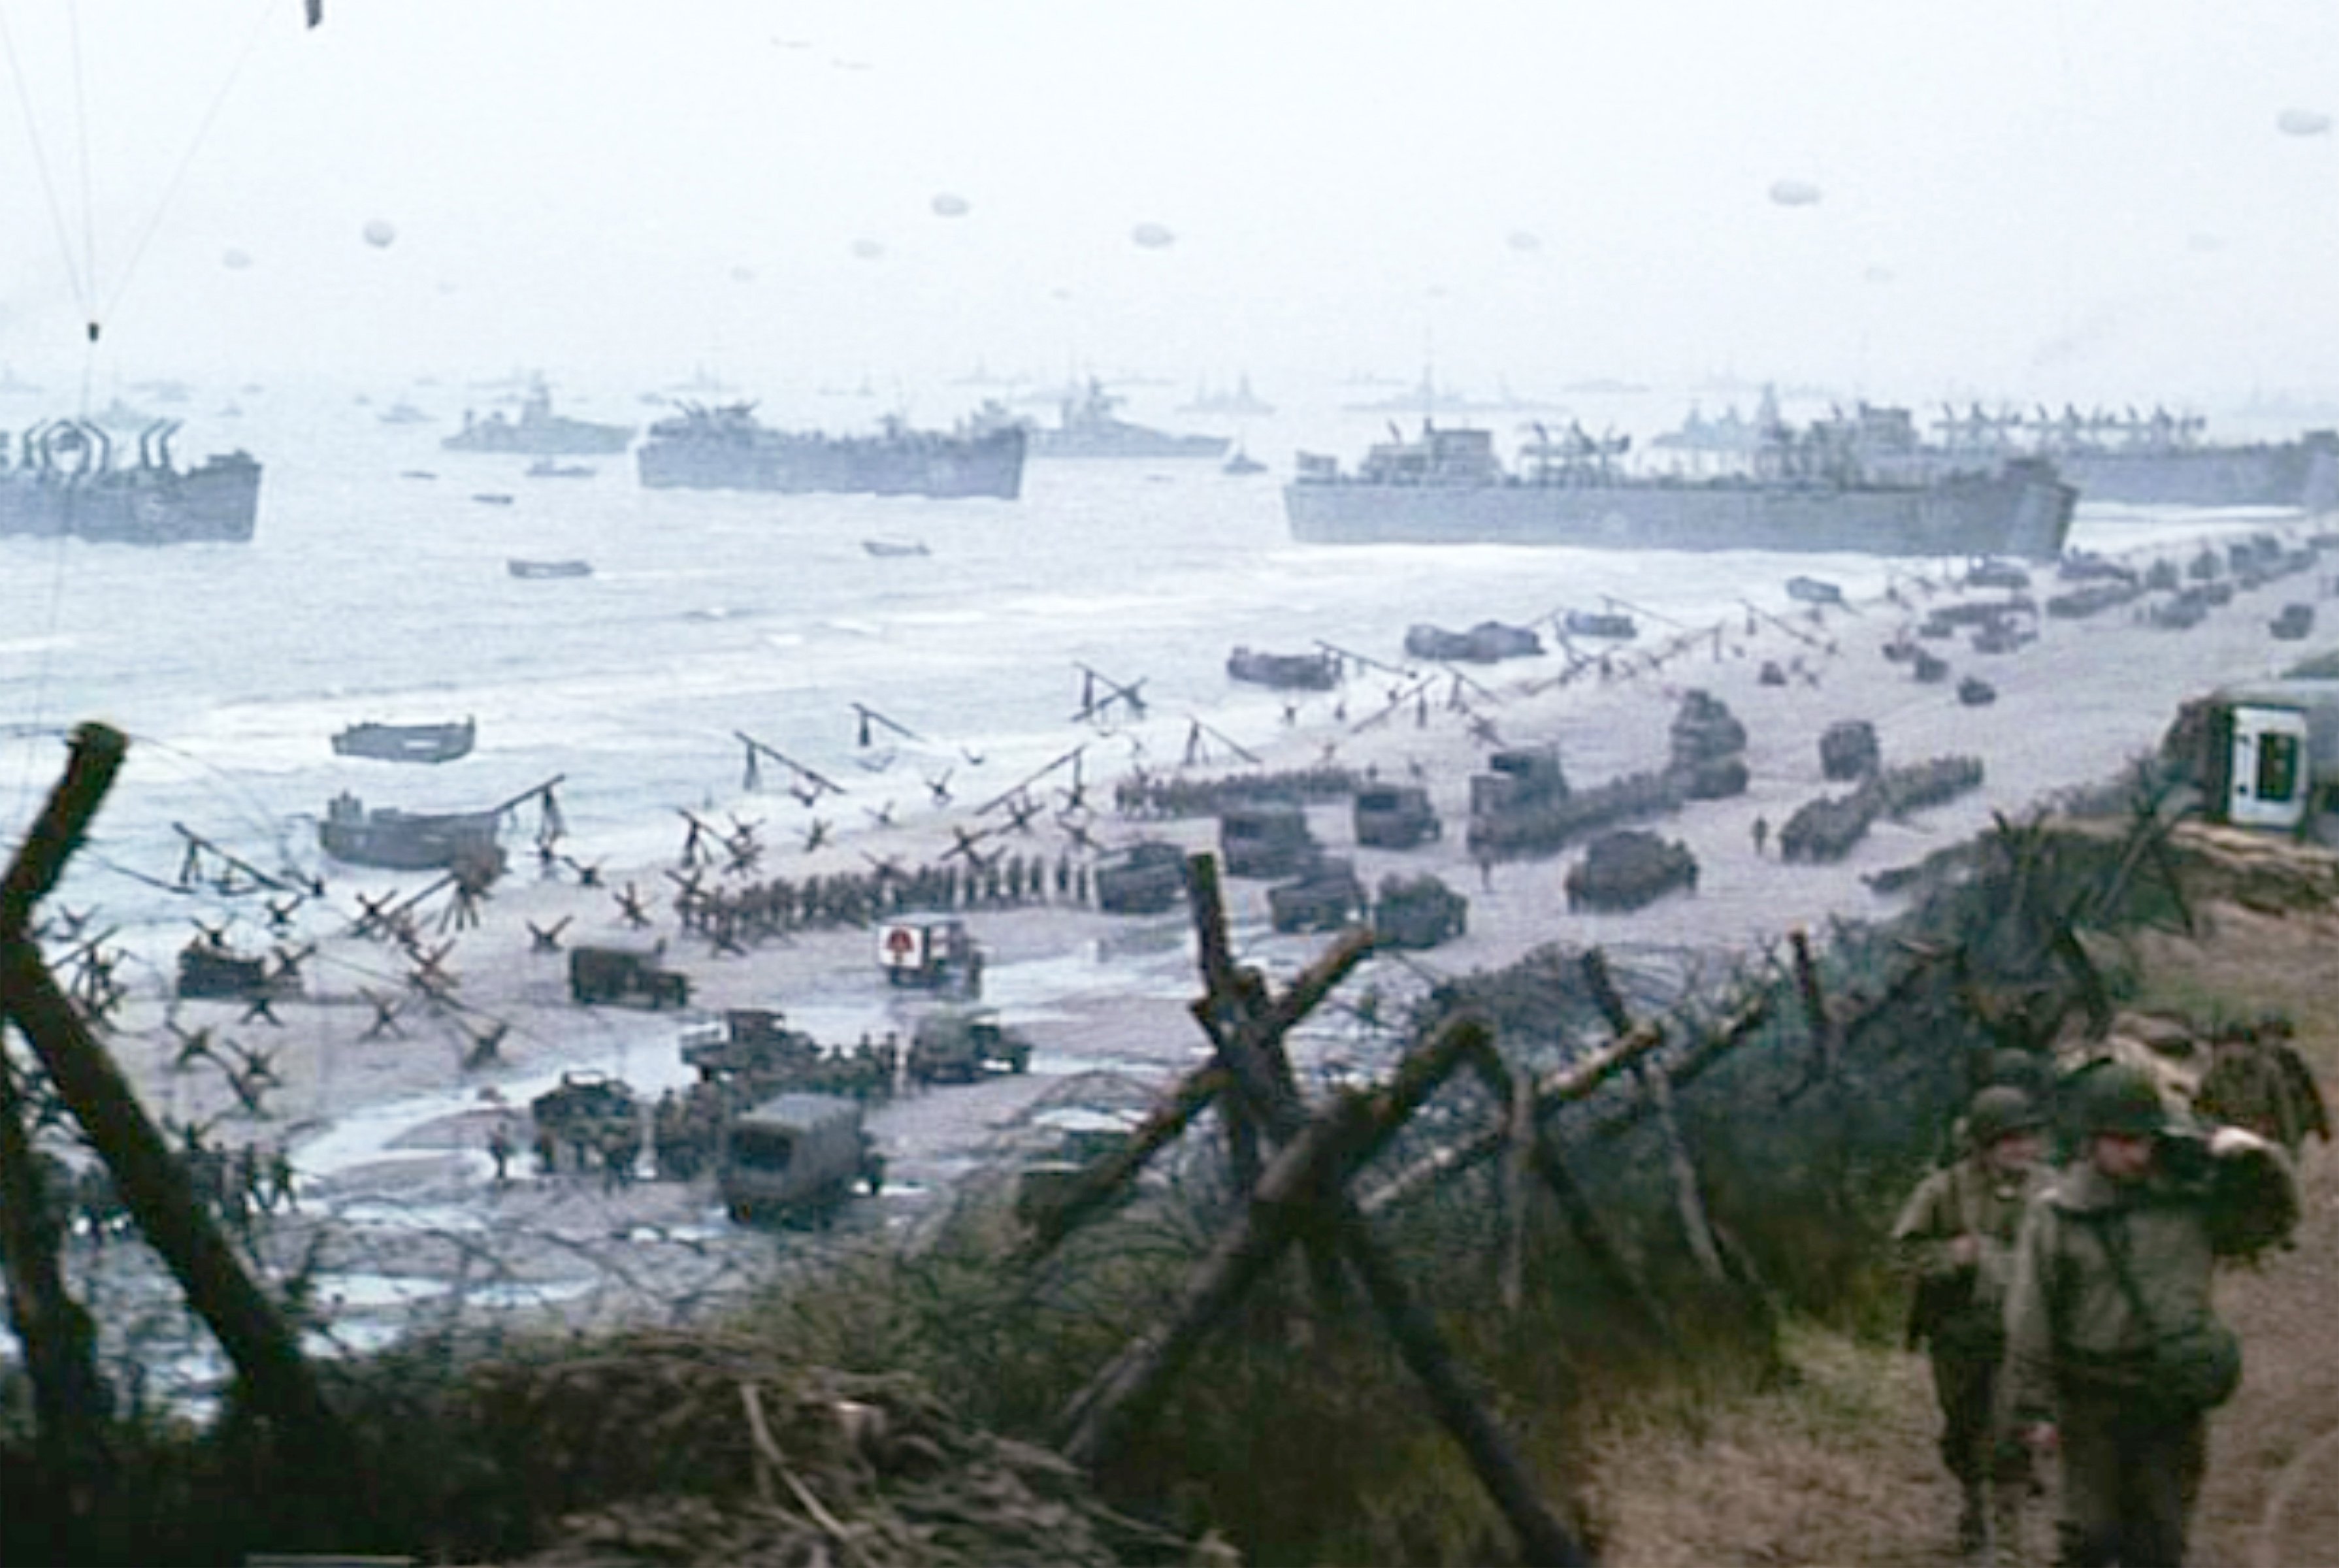 Saving Private Ryan recreates D-Day on Omaha Beach